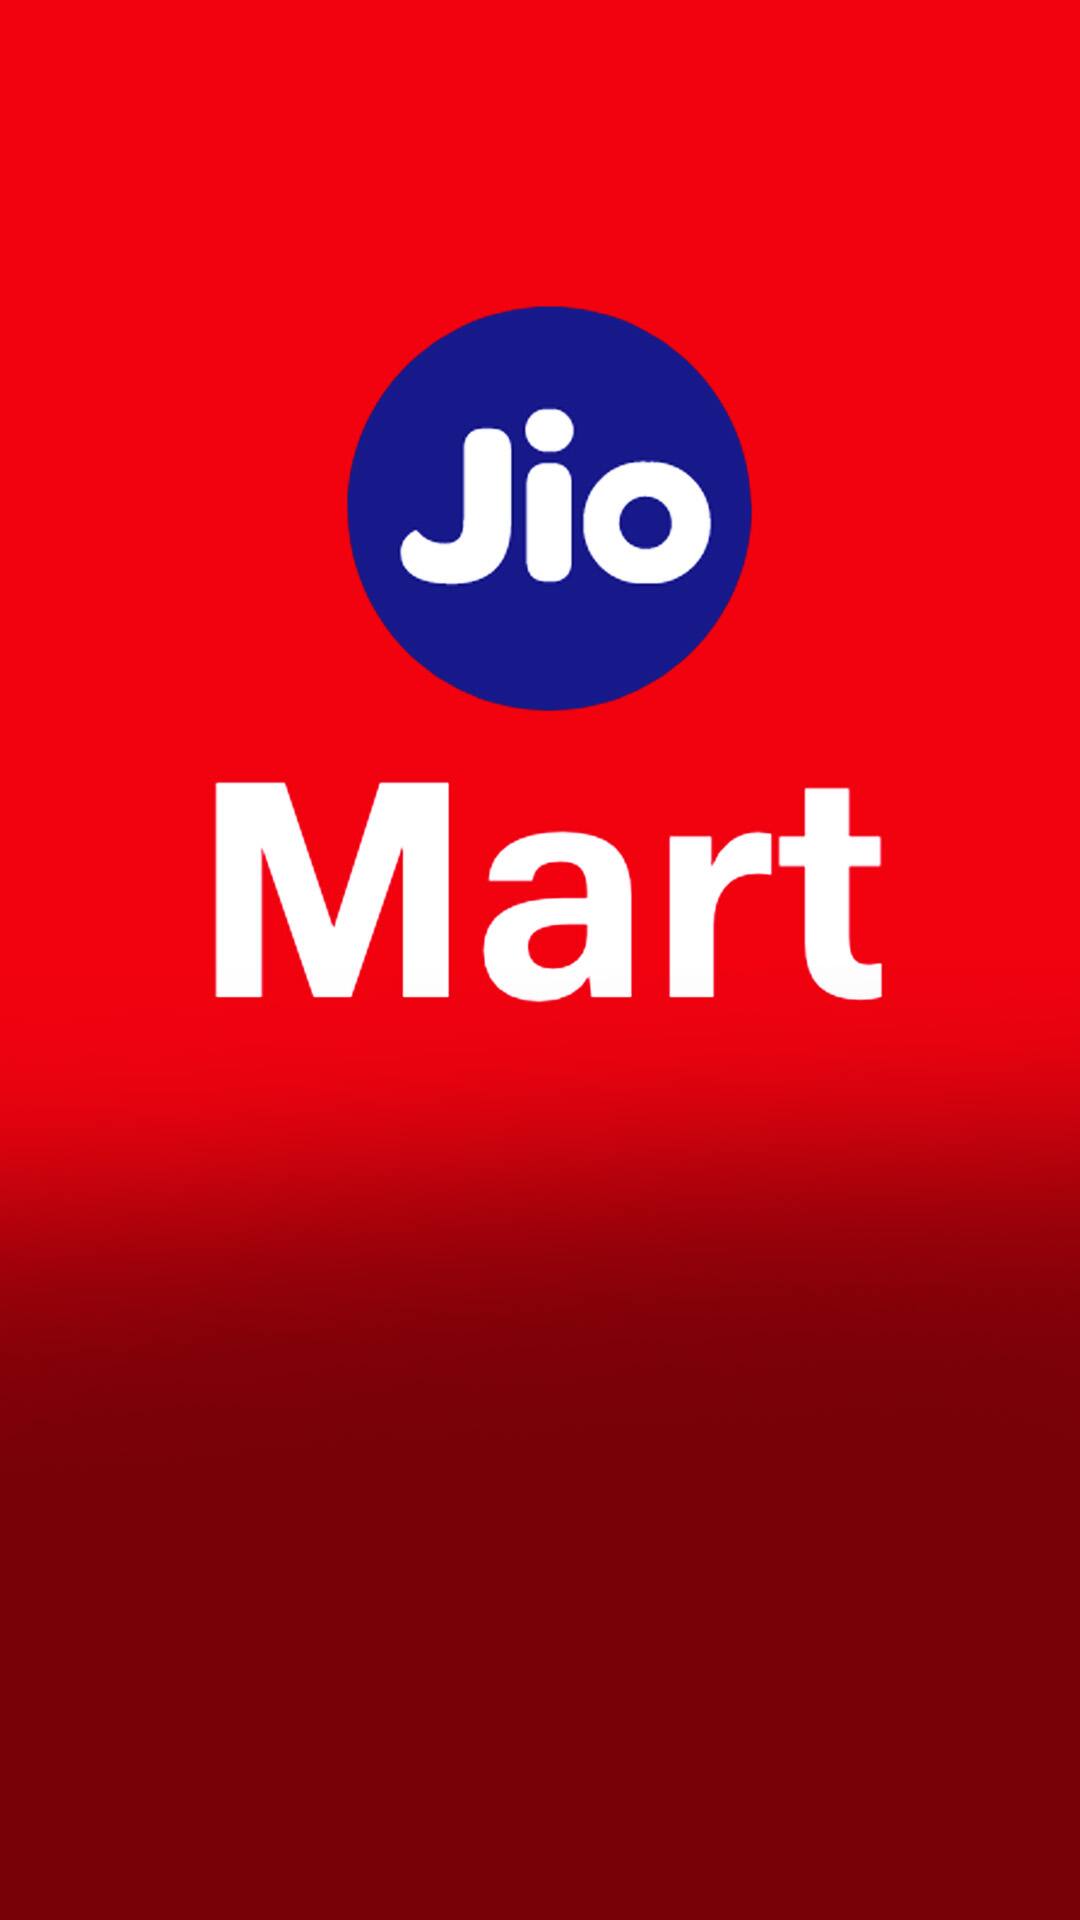 JioMart Business Model: How Reliance's Jio Mart Works & Makes Money?